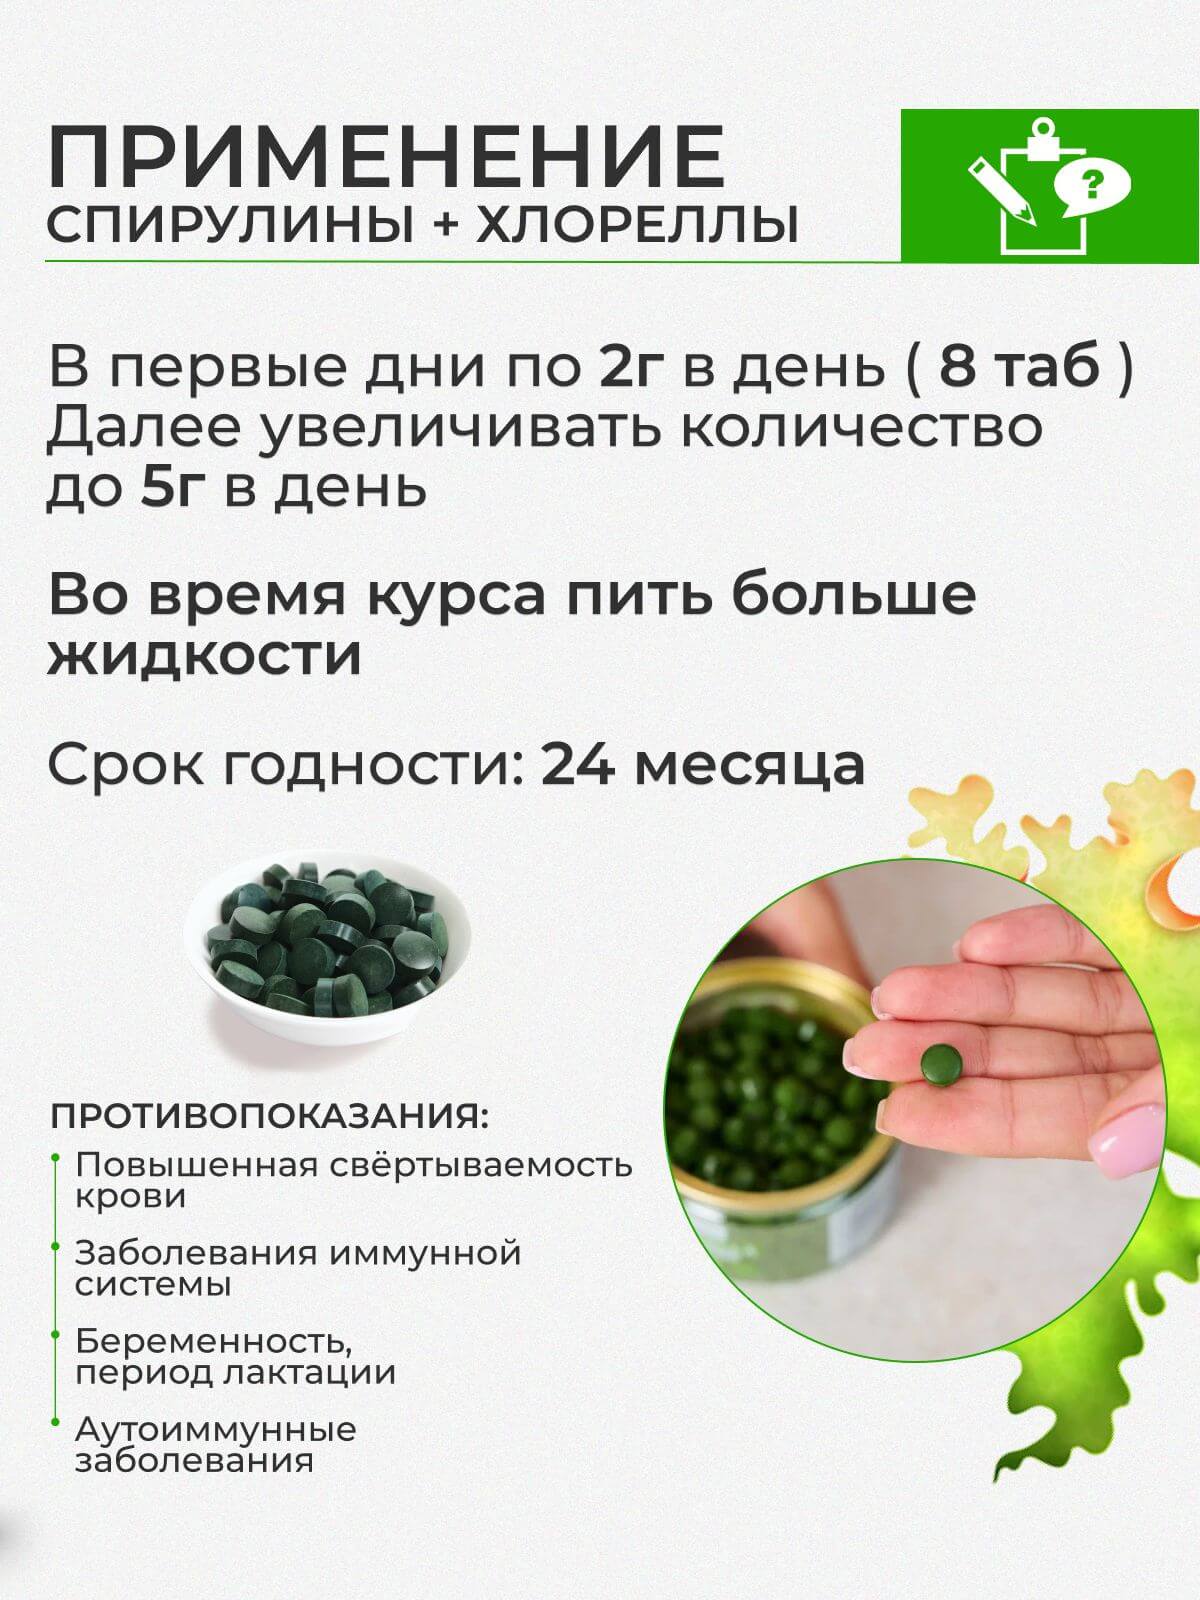 VeganNova Спирулина и хлорелла в таблетках, суперфуд, 100% натуральная, 200 г (800 шт)